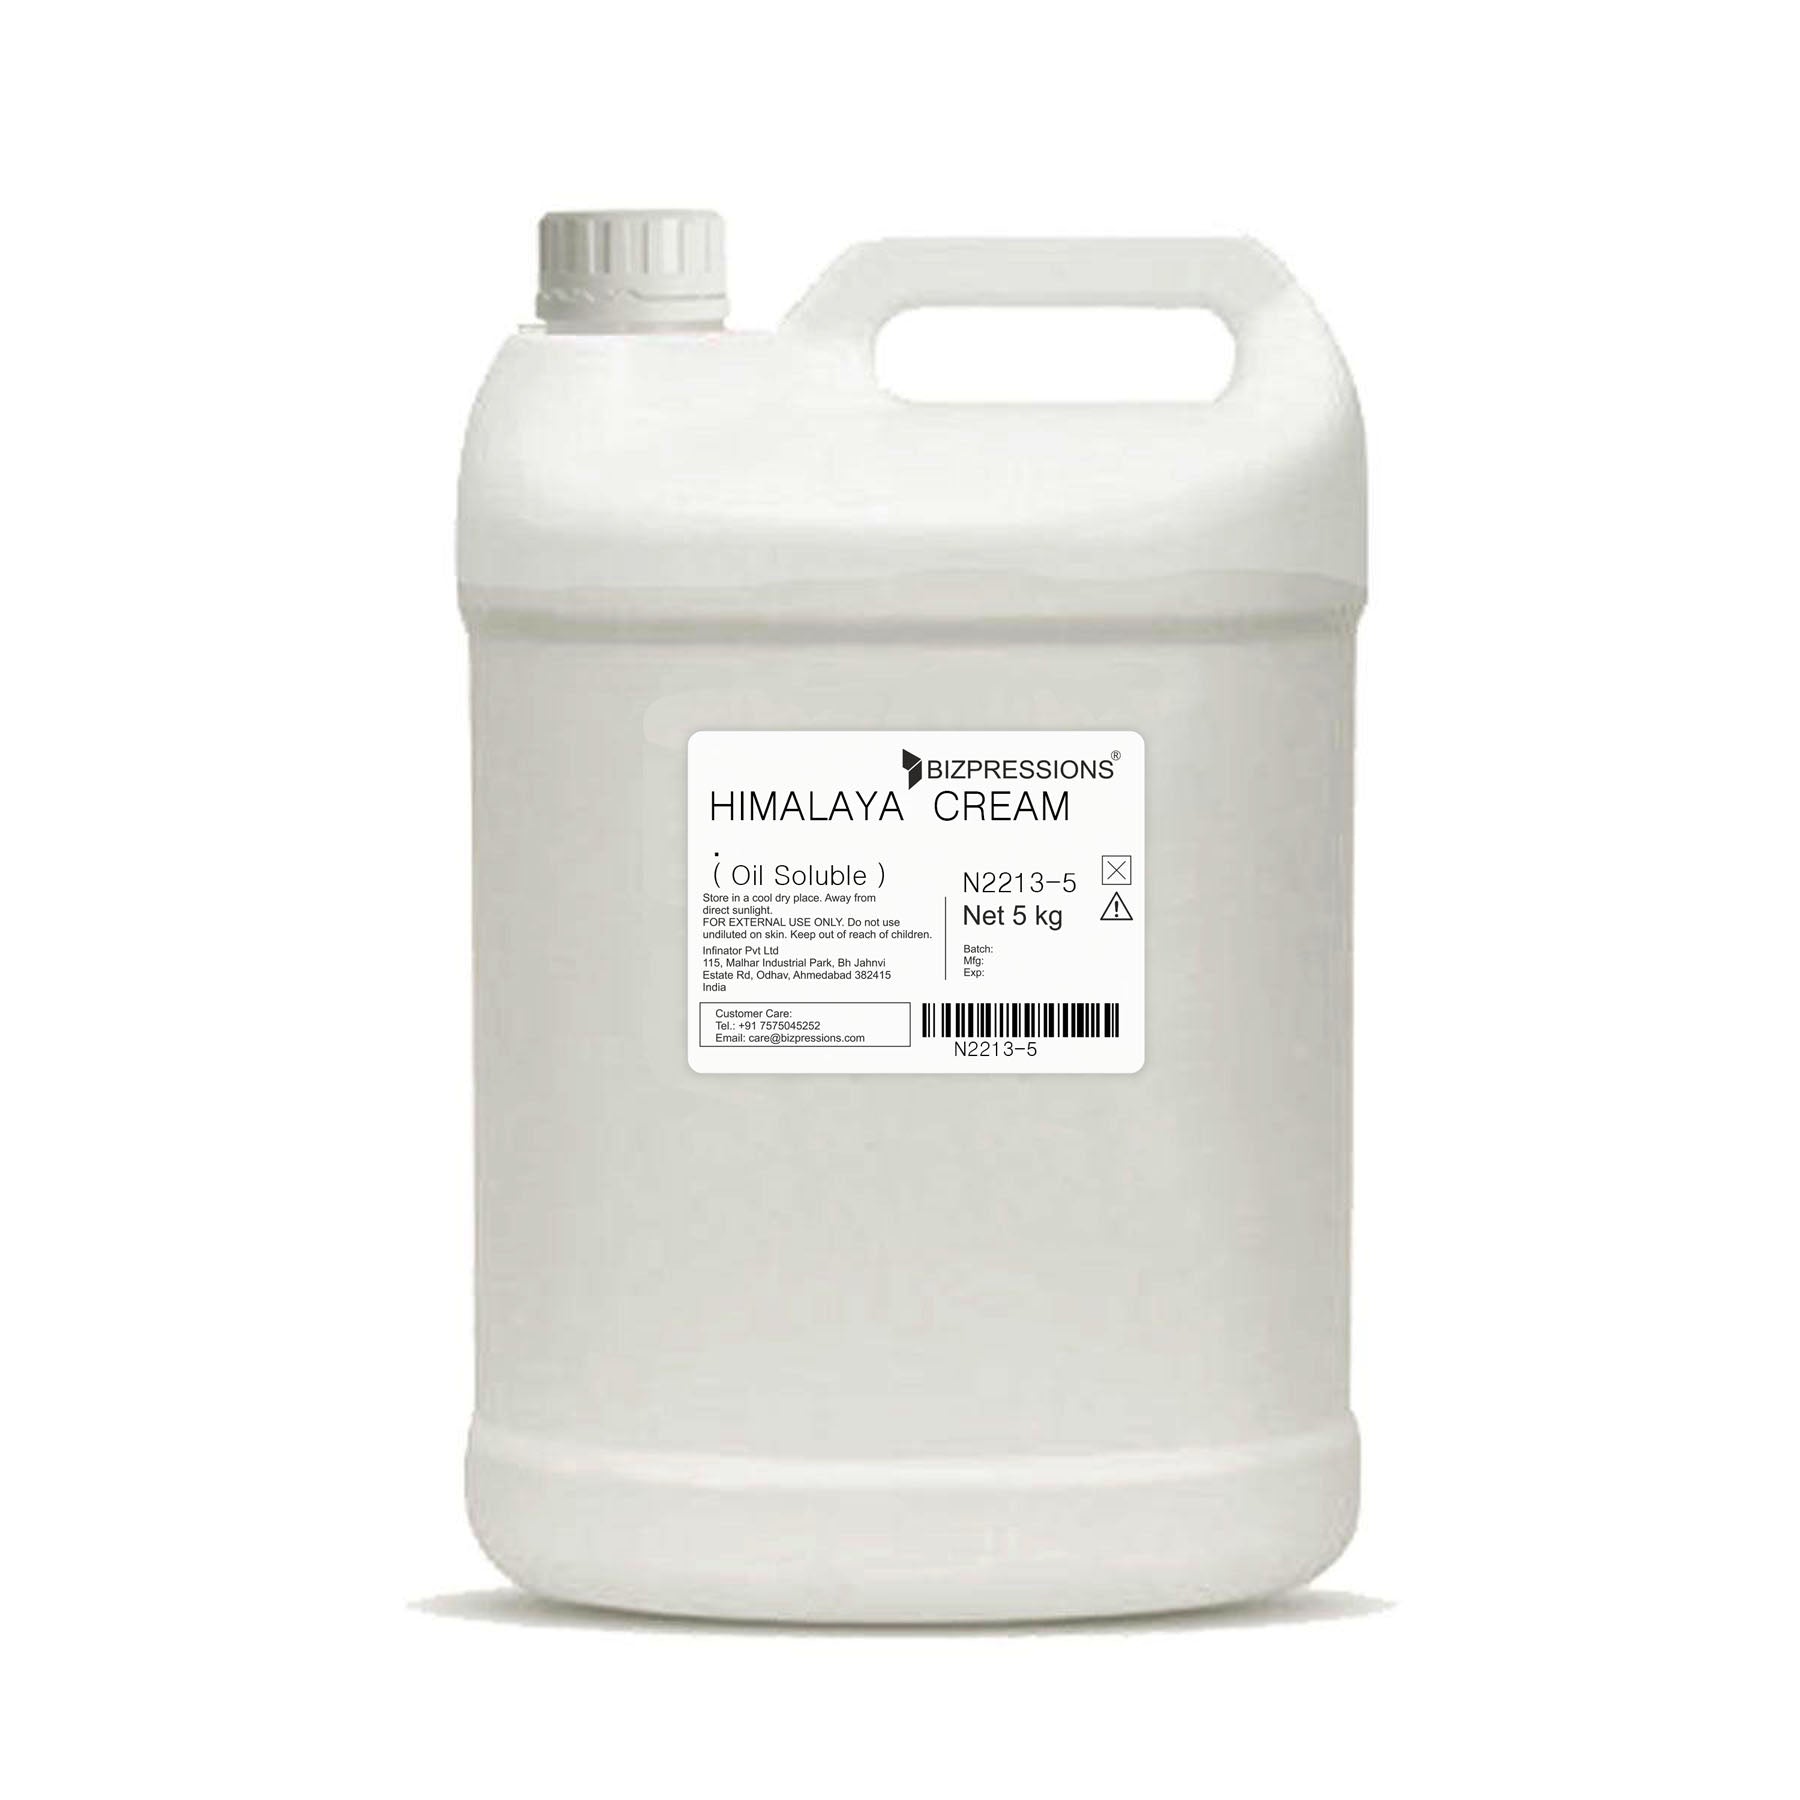 HIMALAYA CREAM - Fragrance ( Oil Soluble ) - 5 kg